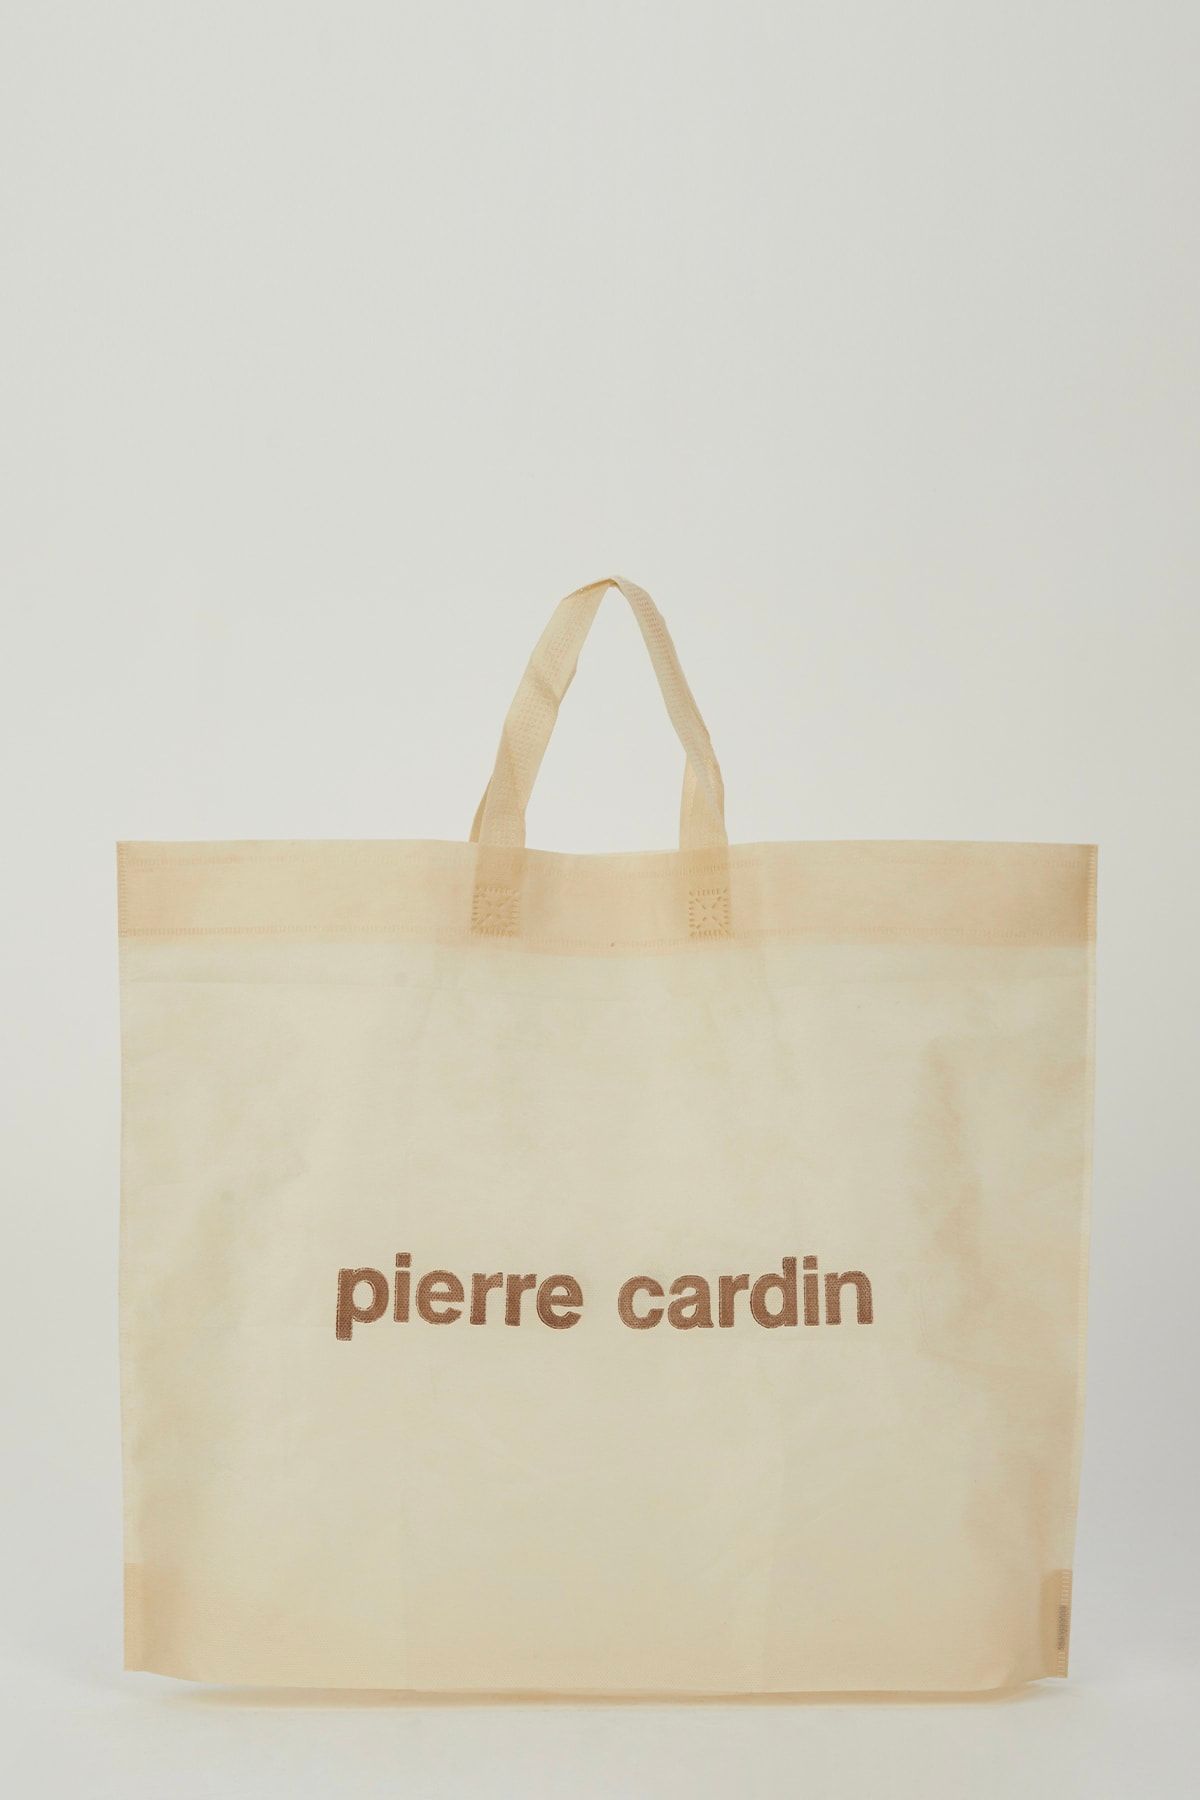 Pierre Cardin Matter Lavender Portfolio & Clutch Bag 05PO23Y1713